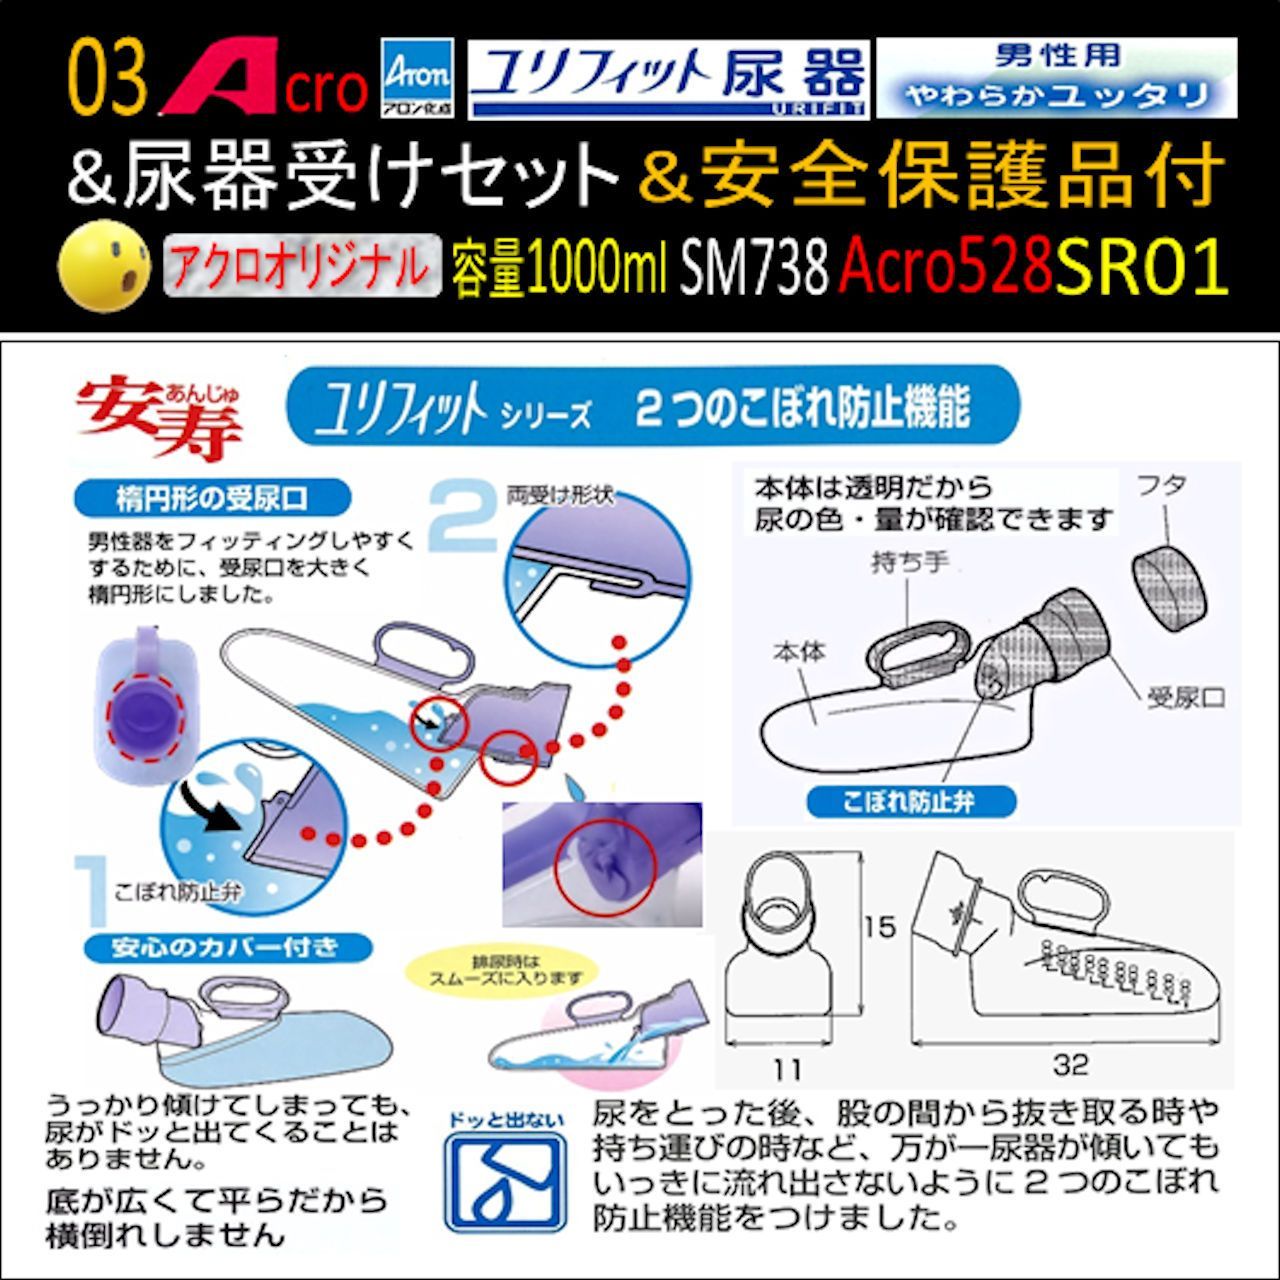 Acro528ユリフィット尿器男性用&尿器受けセット&衛生・安全品付SR01